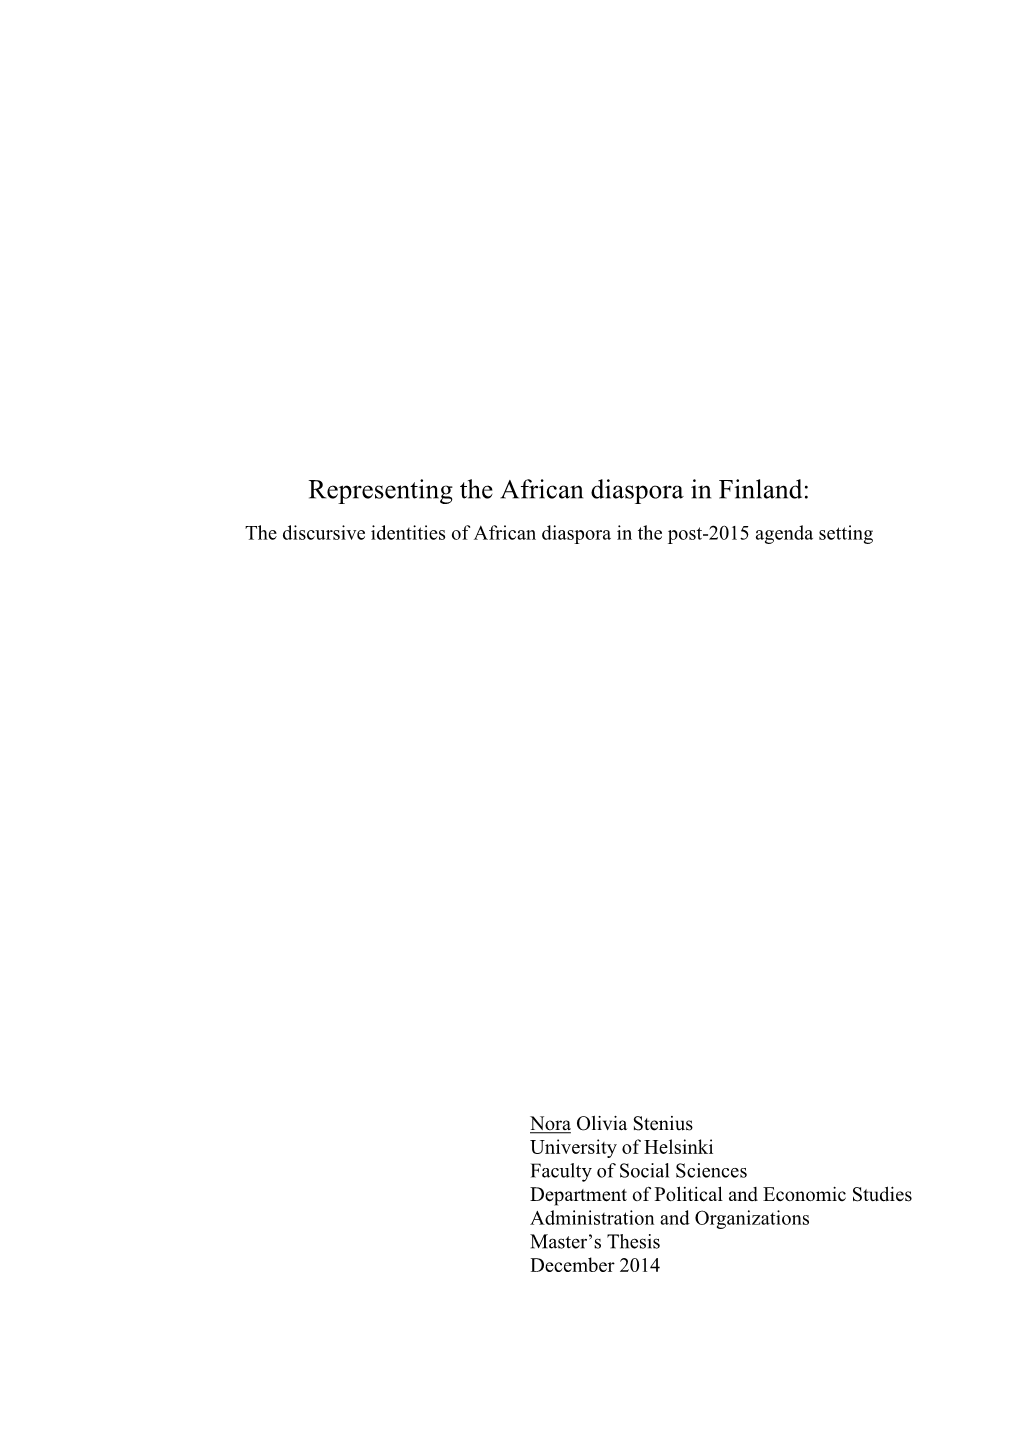 Representing the African Diaspora in Finland: the Discursive Identities of African Diaspora in the Post-2015 Agenda Setting